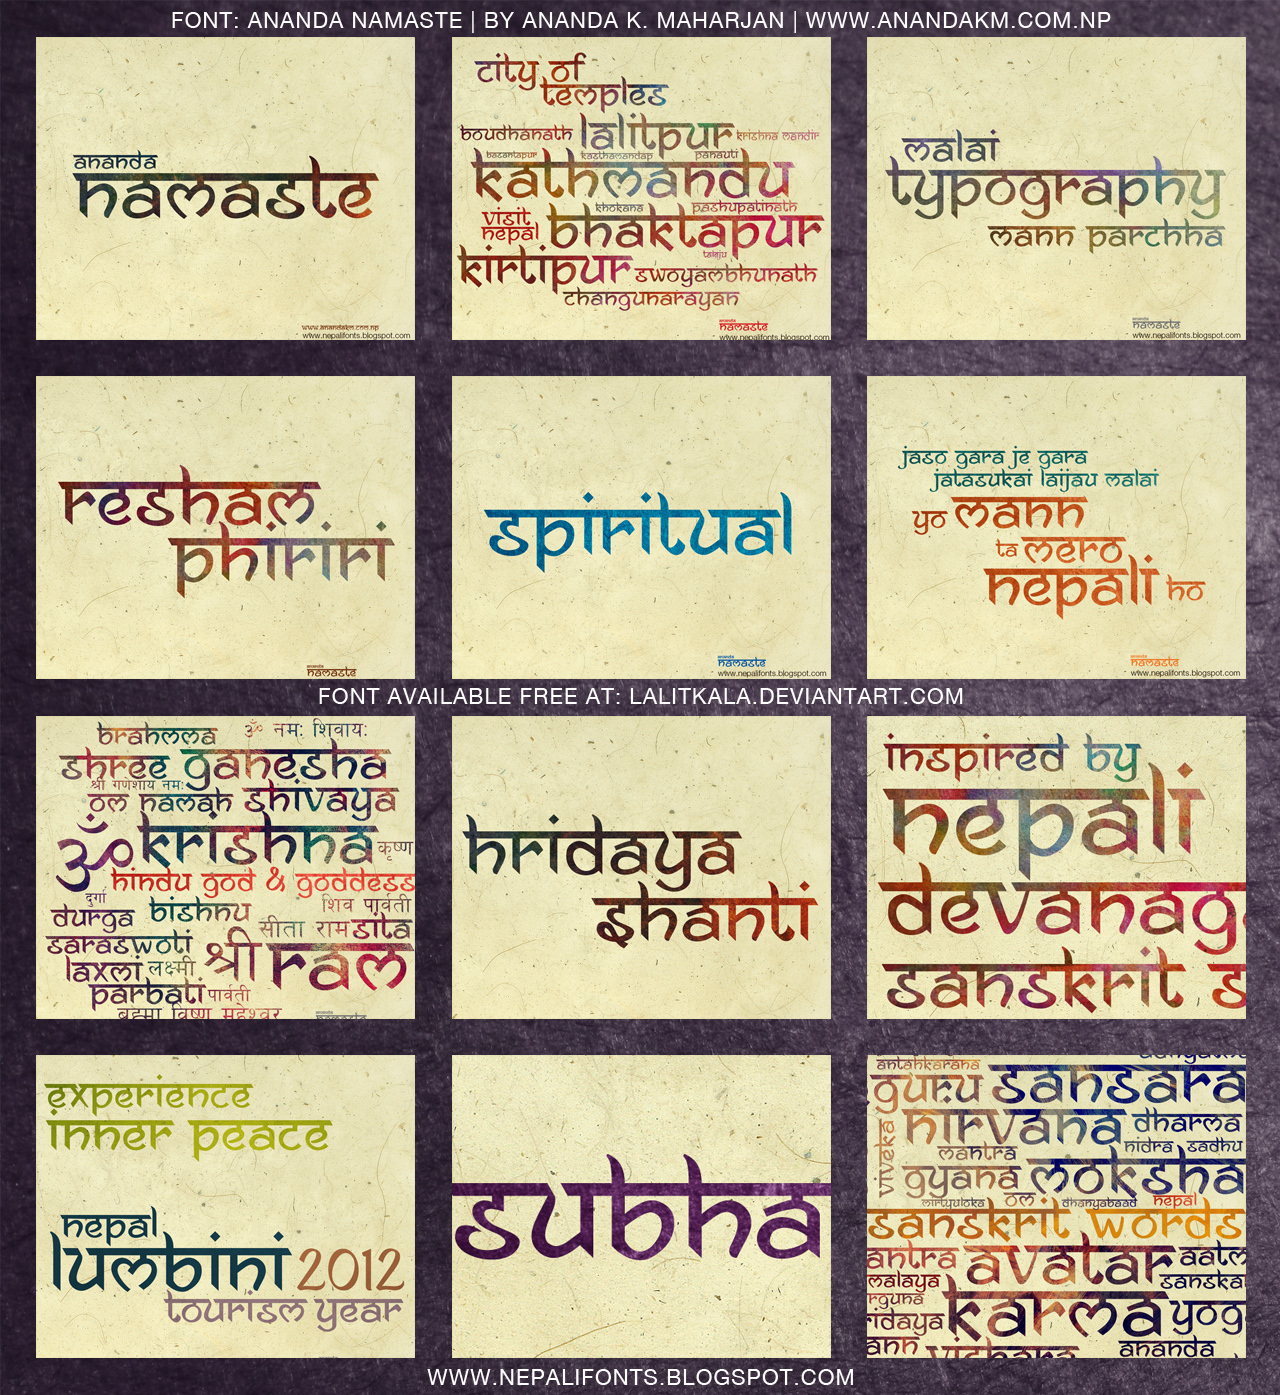 Ananda Namaste font Devanagari inspired